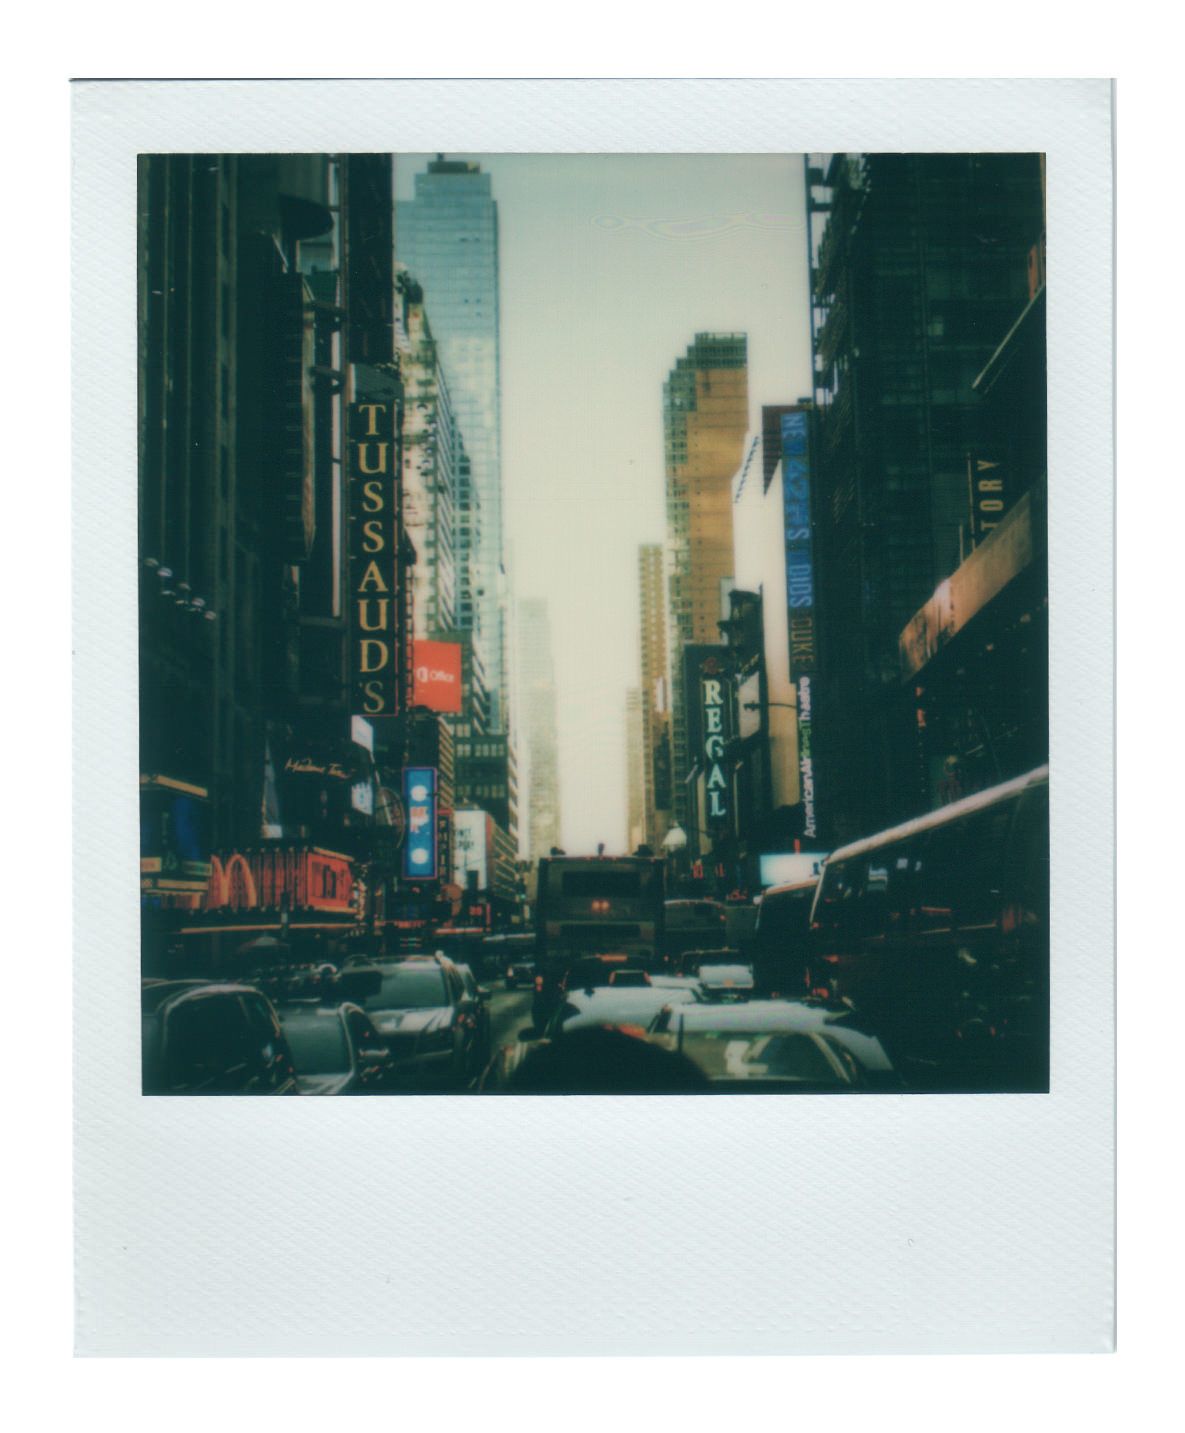 Polaroid Lab Review: Turn Your Smartphone Snaps Into Polaroid Prints